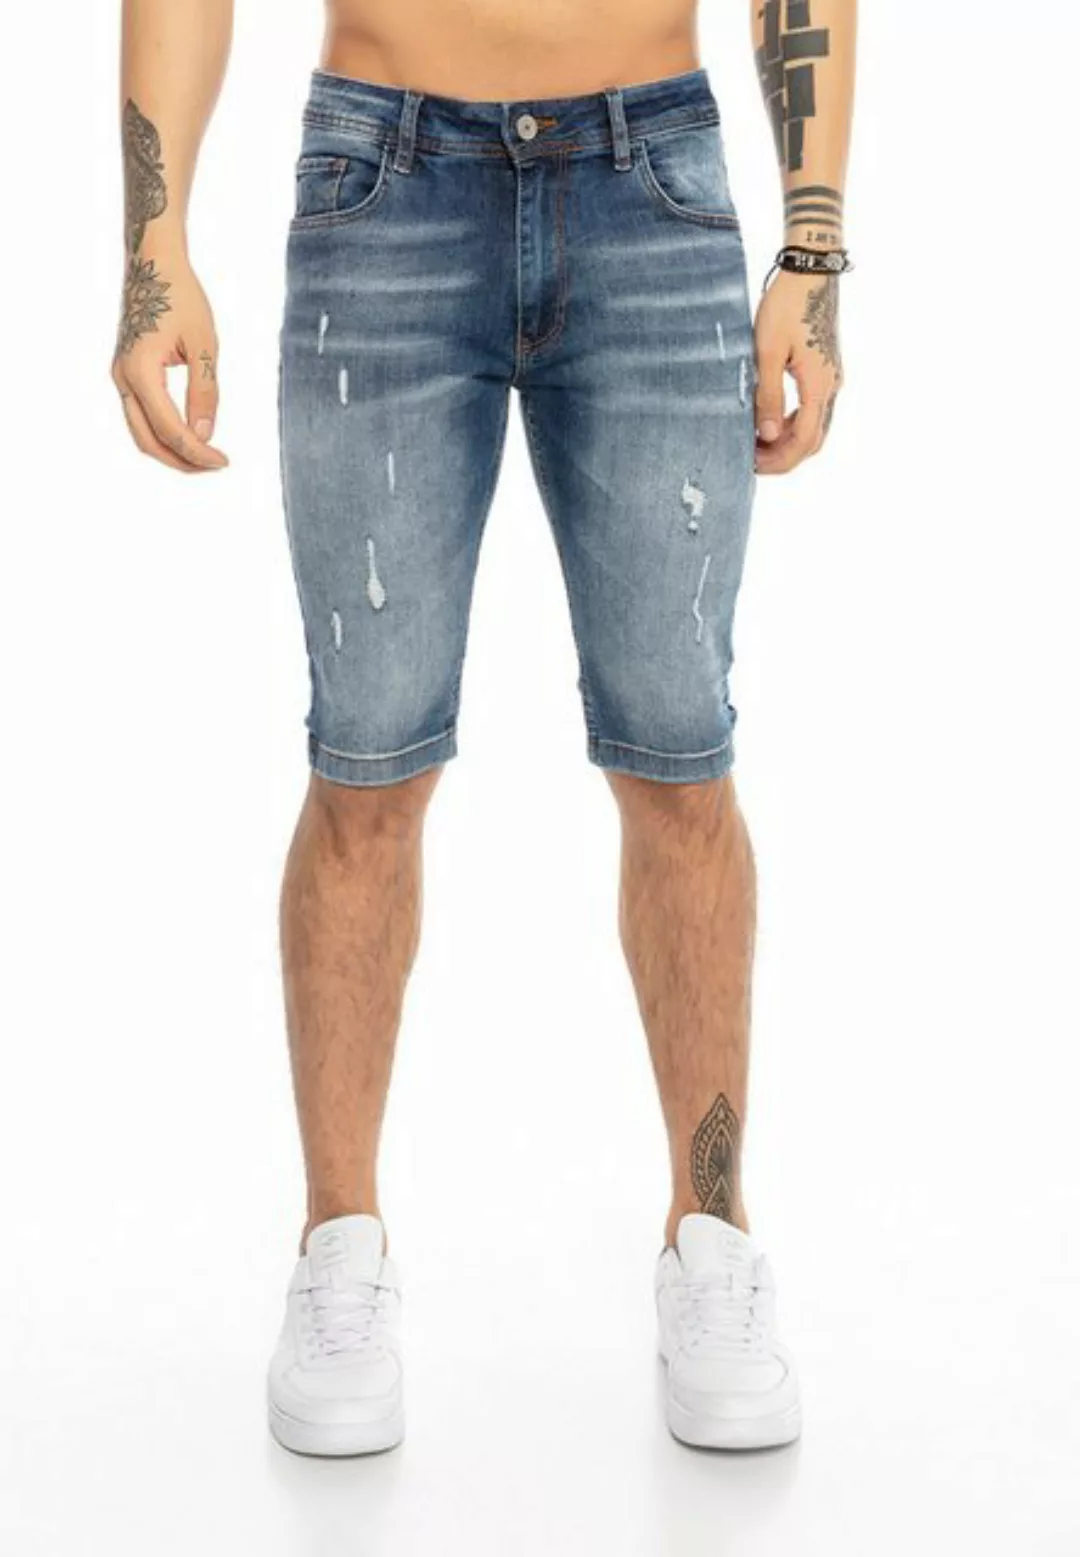 RedBridge Jeansshorts Red Bridge Herren Jeans Shorts Kurze Hose Denim fetzi günstig online kaufen